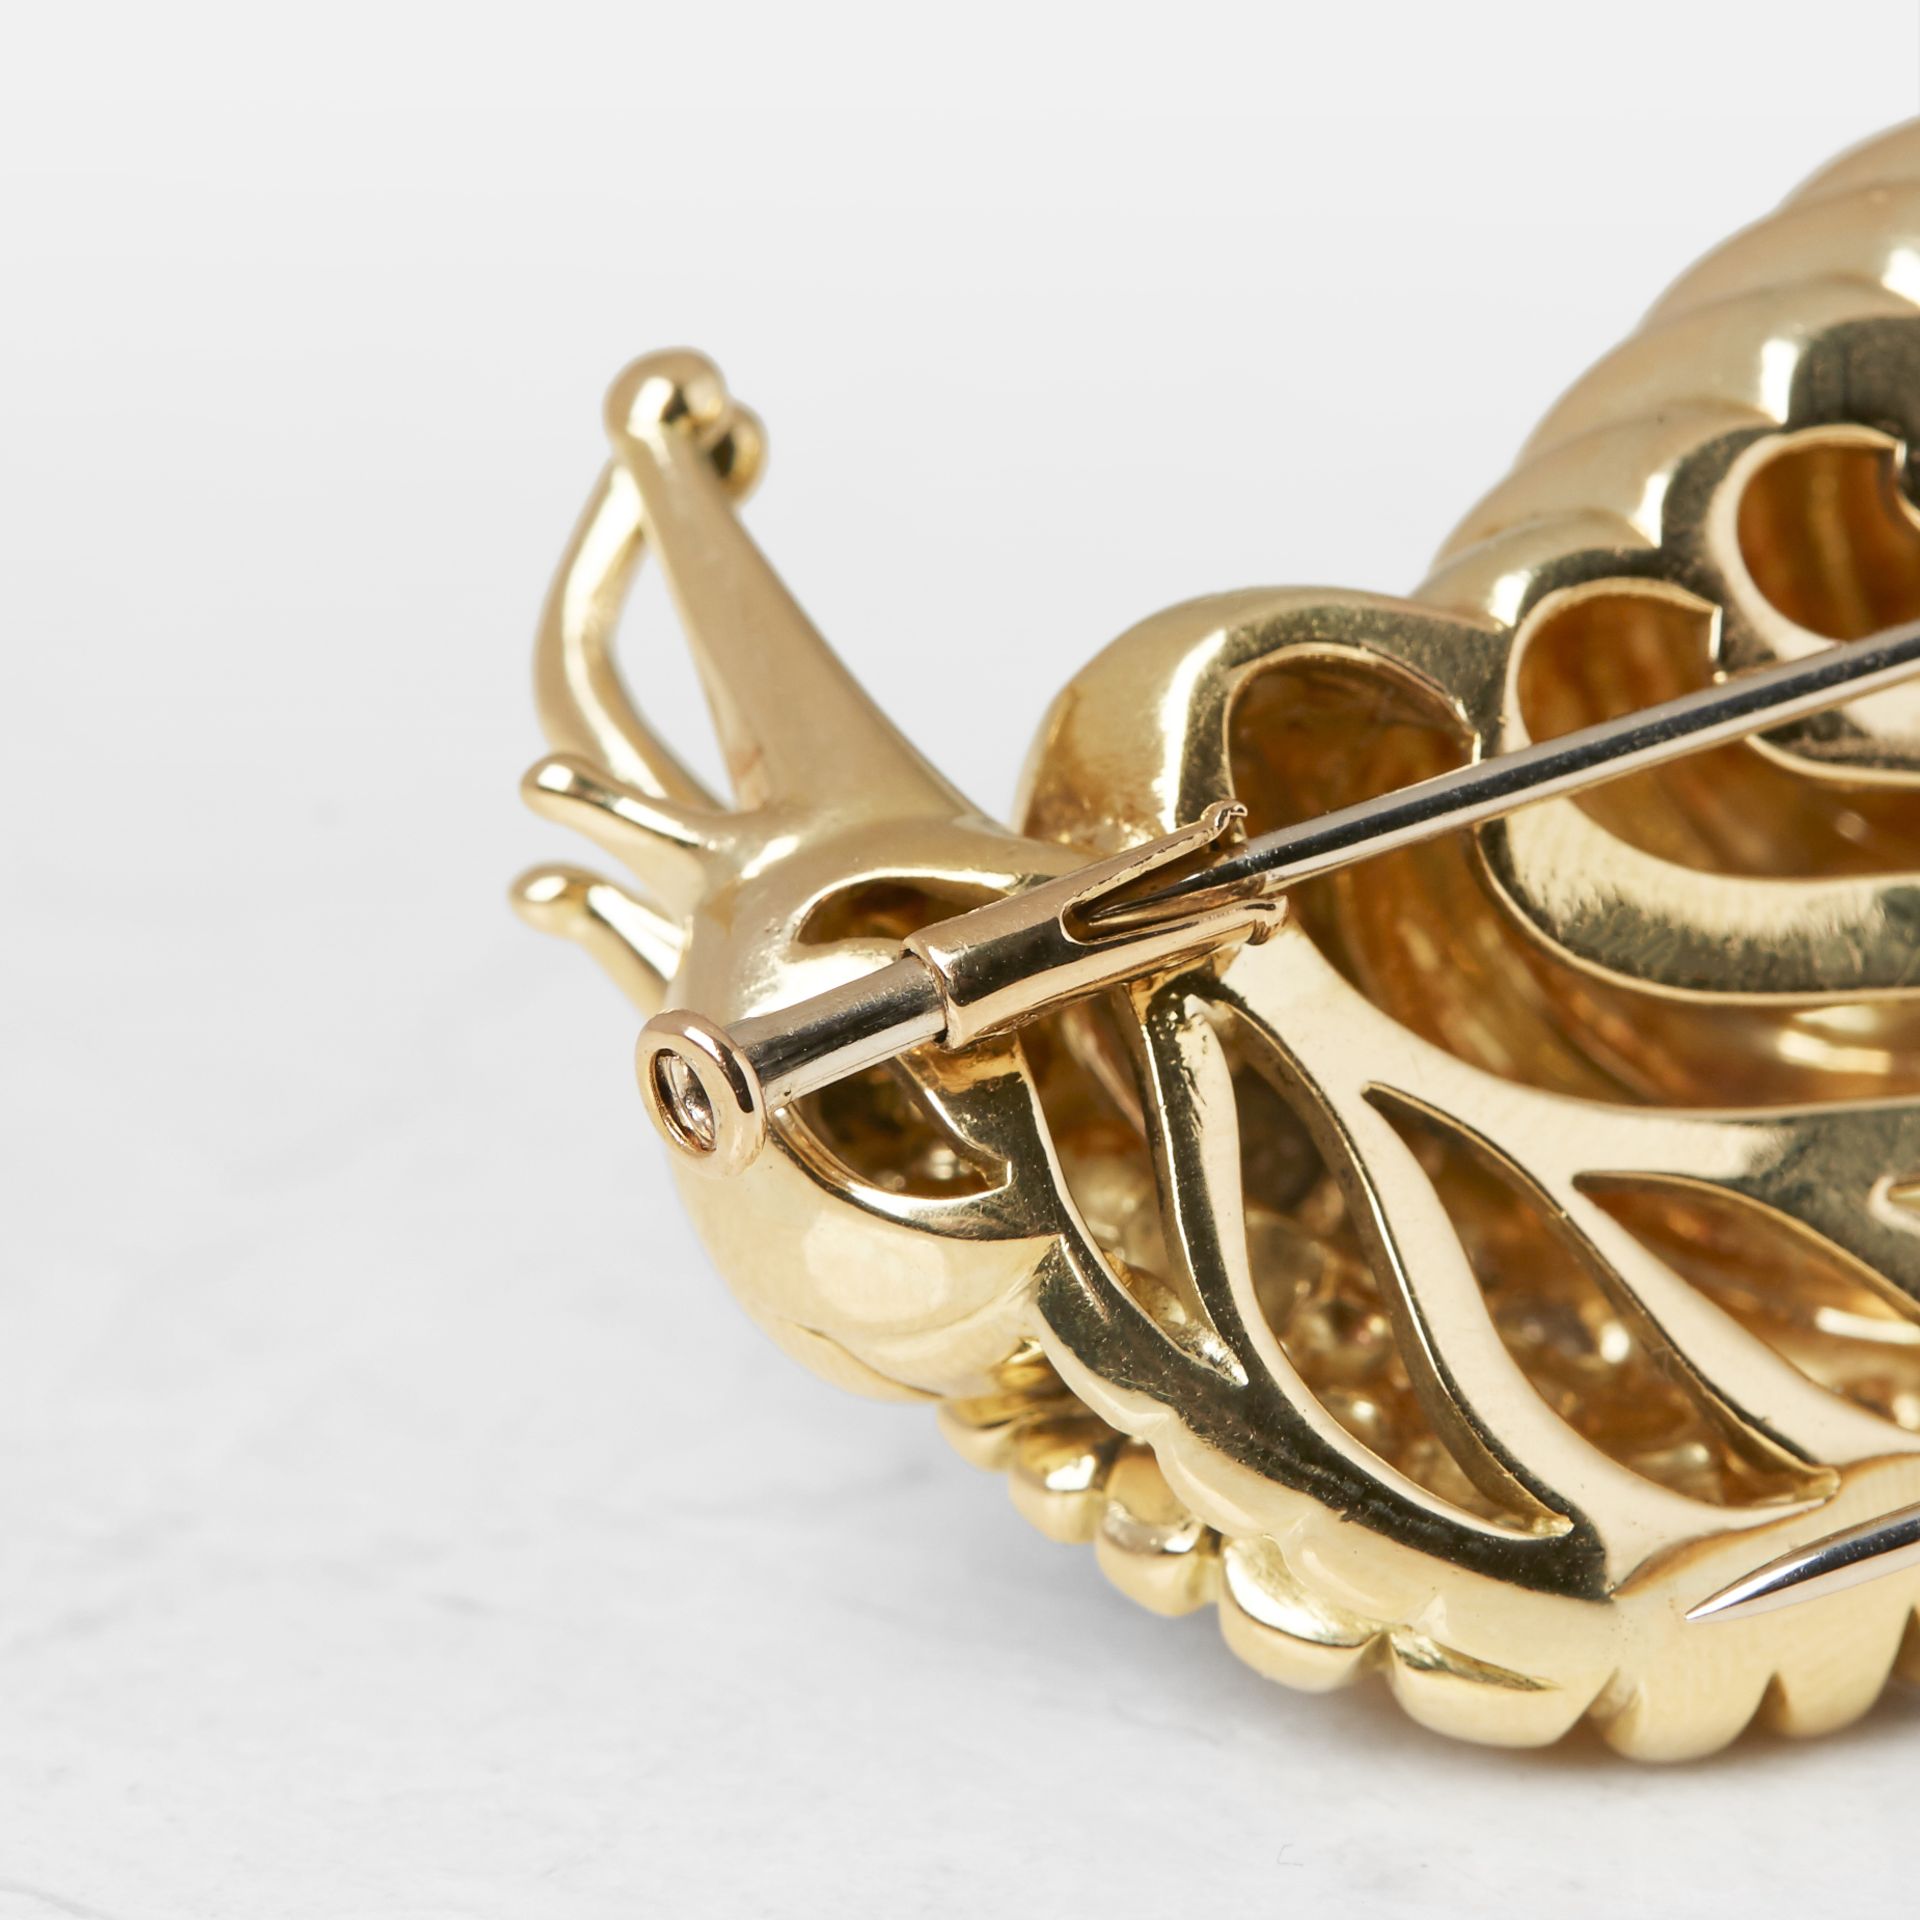 Rene Boivin 18k Yellow Gold Diamond Snail Brooch with Presentation Box - Image 9 of 19